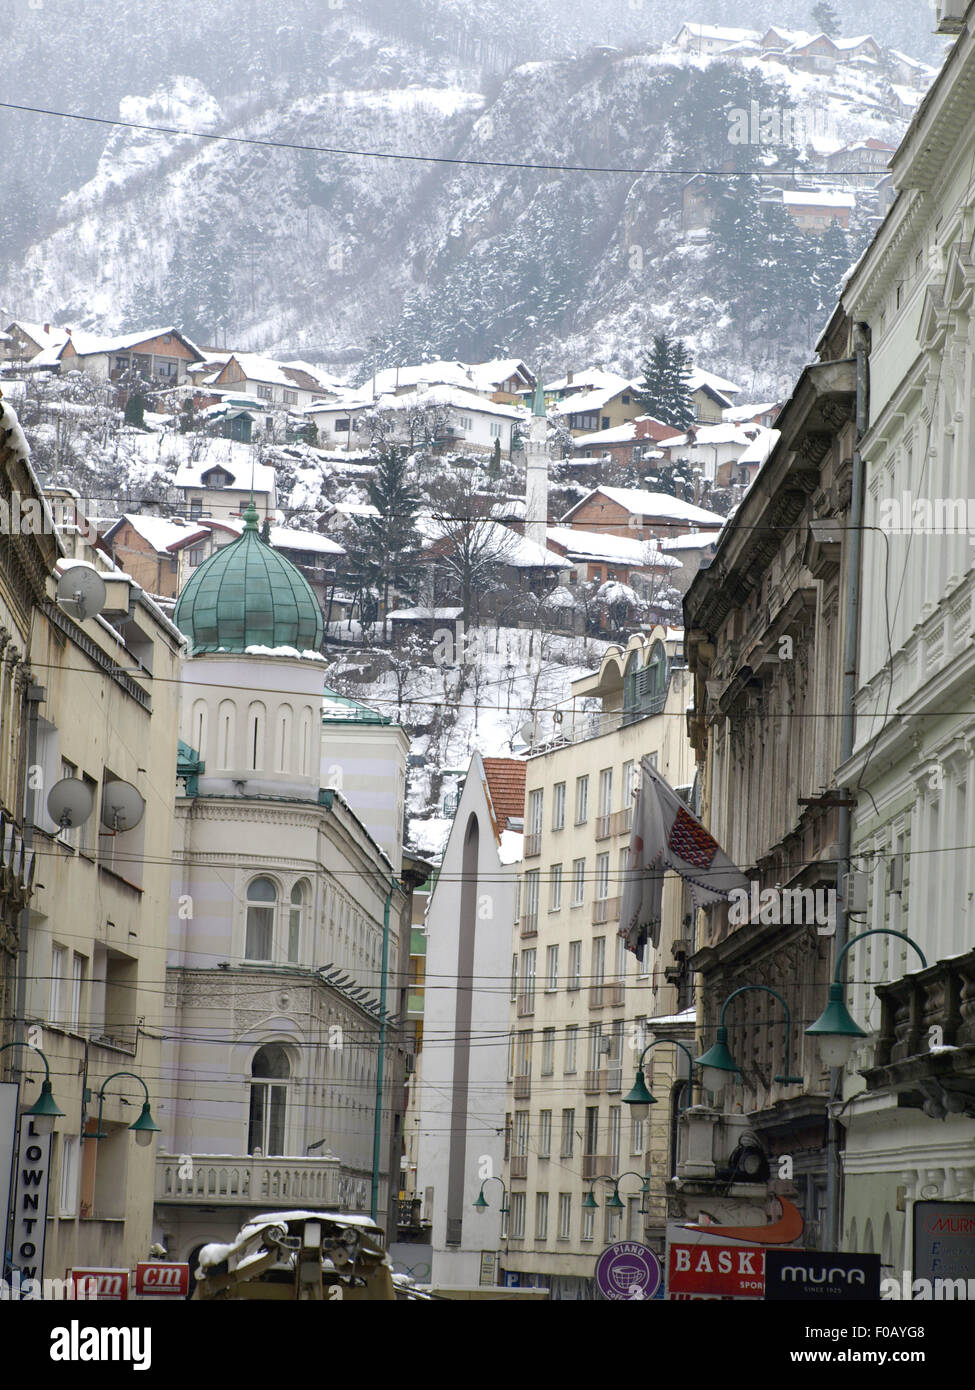 Sarajevo under snow, urban area Stock Photo